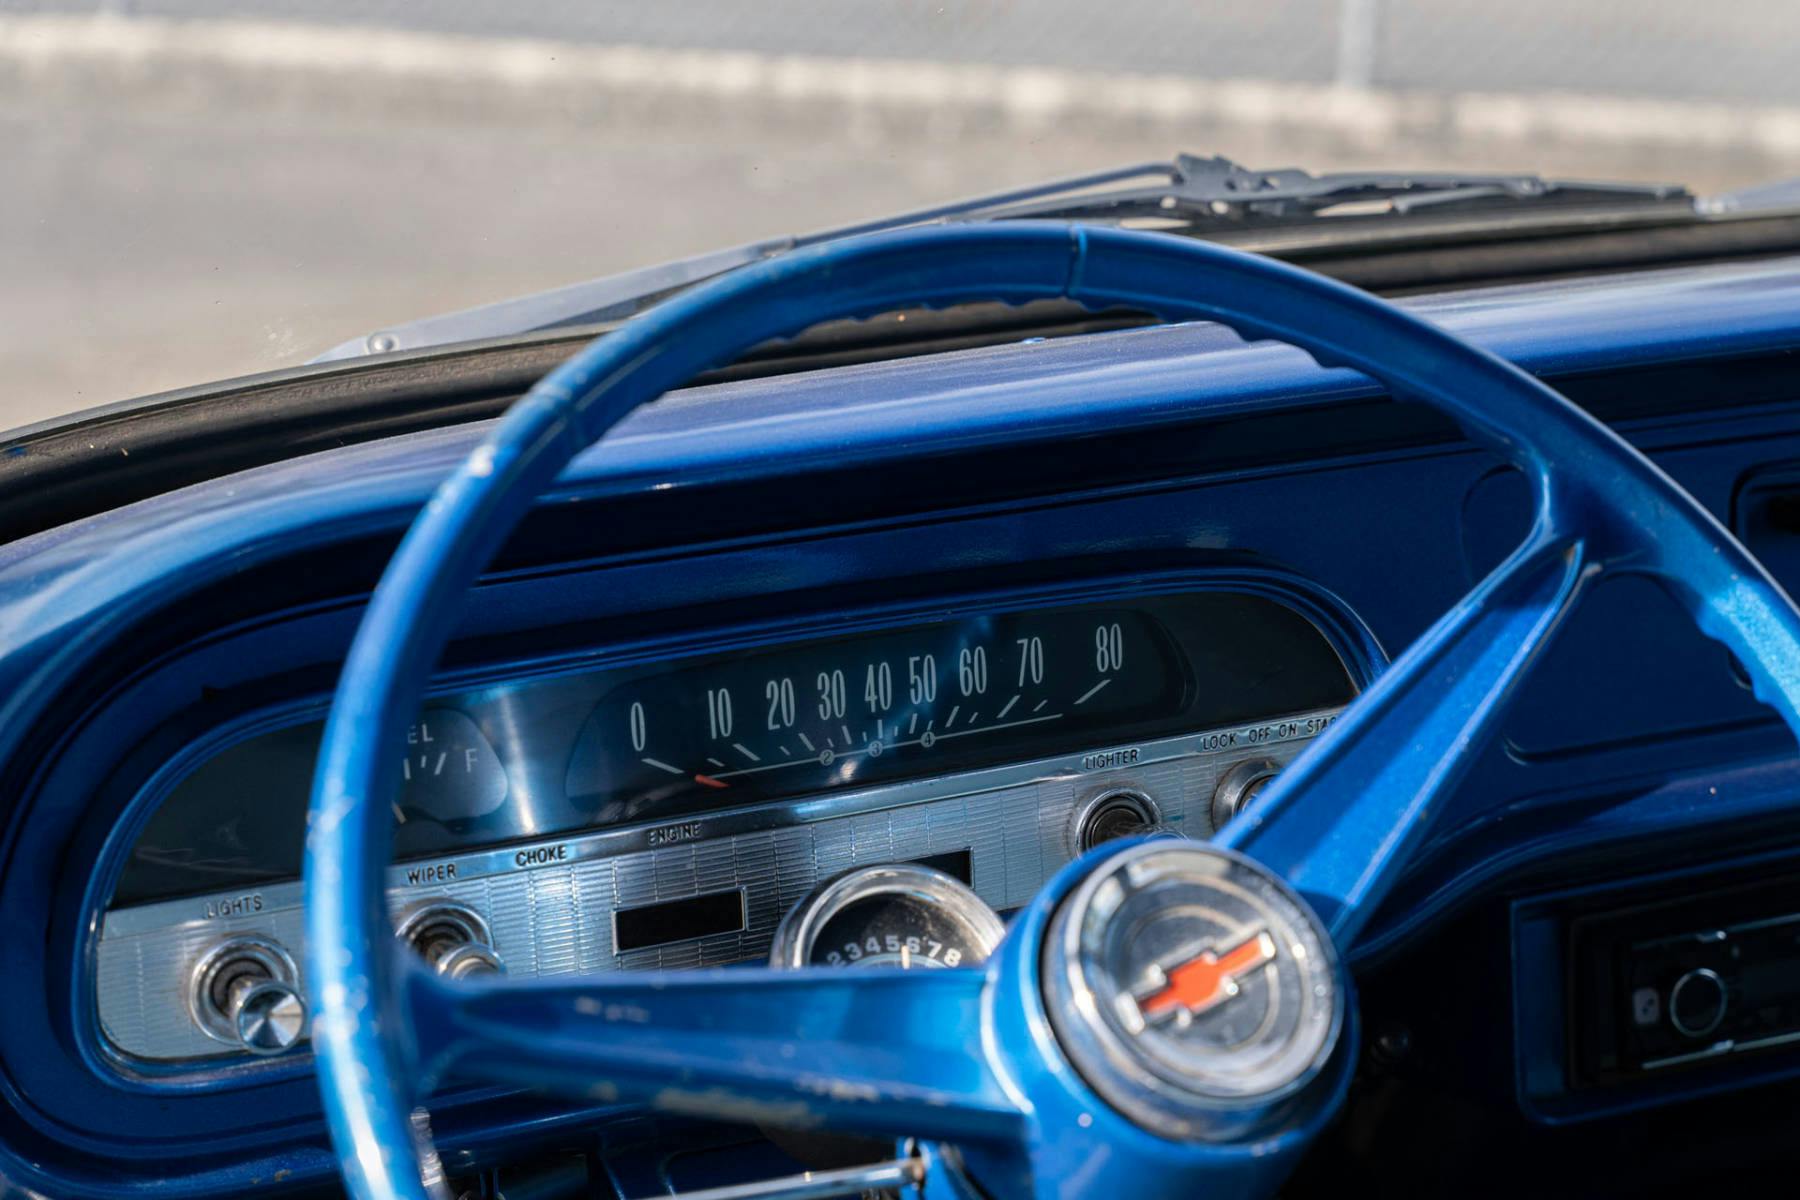 1961 Chevrolet Corvair 95 Rampside Pickup speedometer